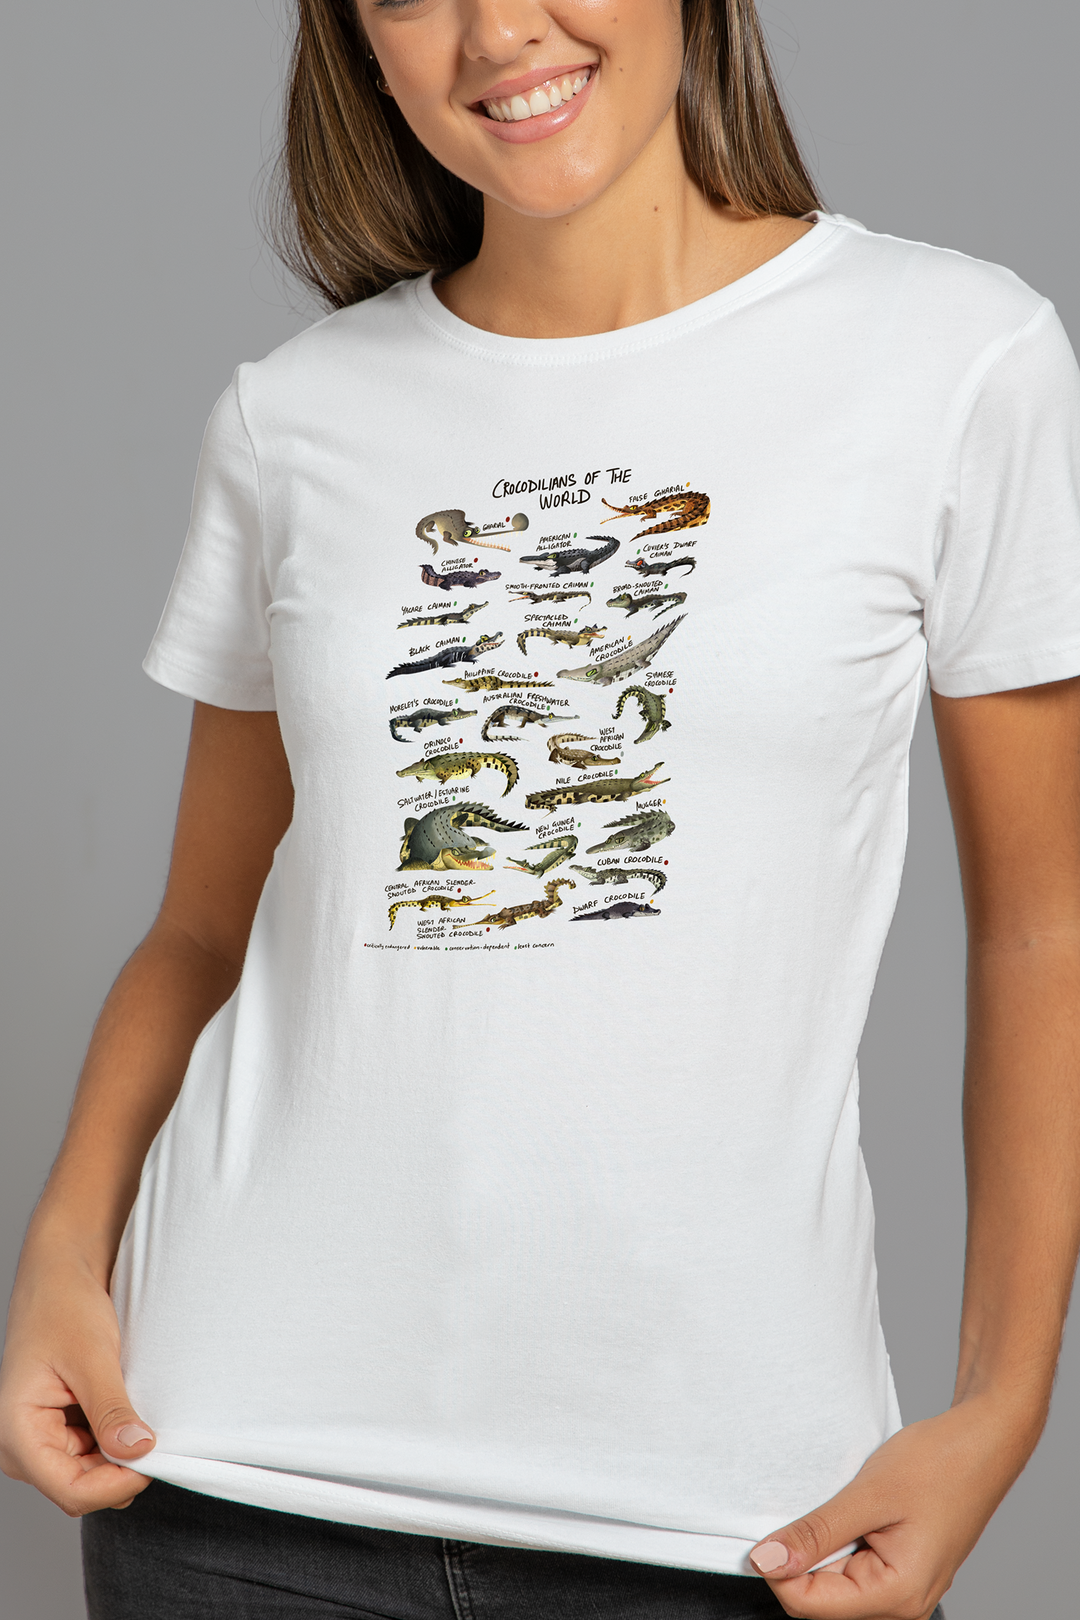 Crocodilians Of The World Tshirt